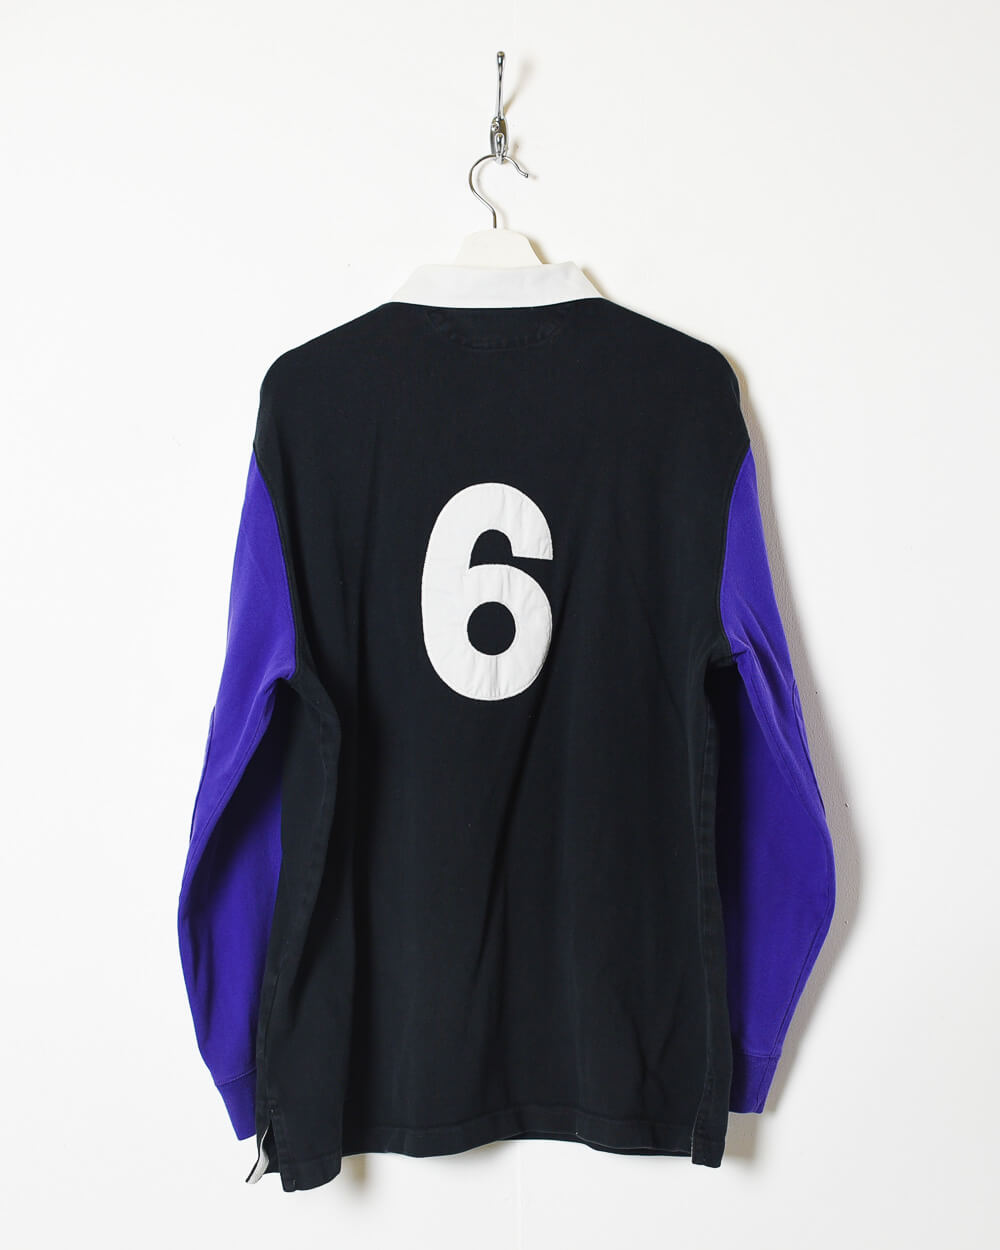 Black Ralph Lauren 6 Rugby Shirt - Large